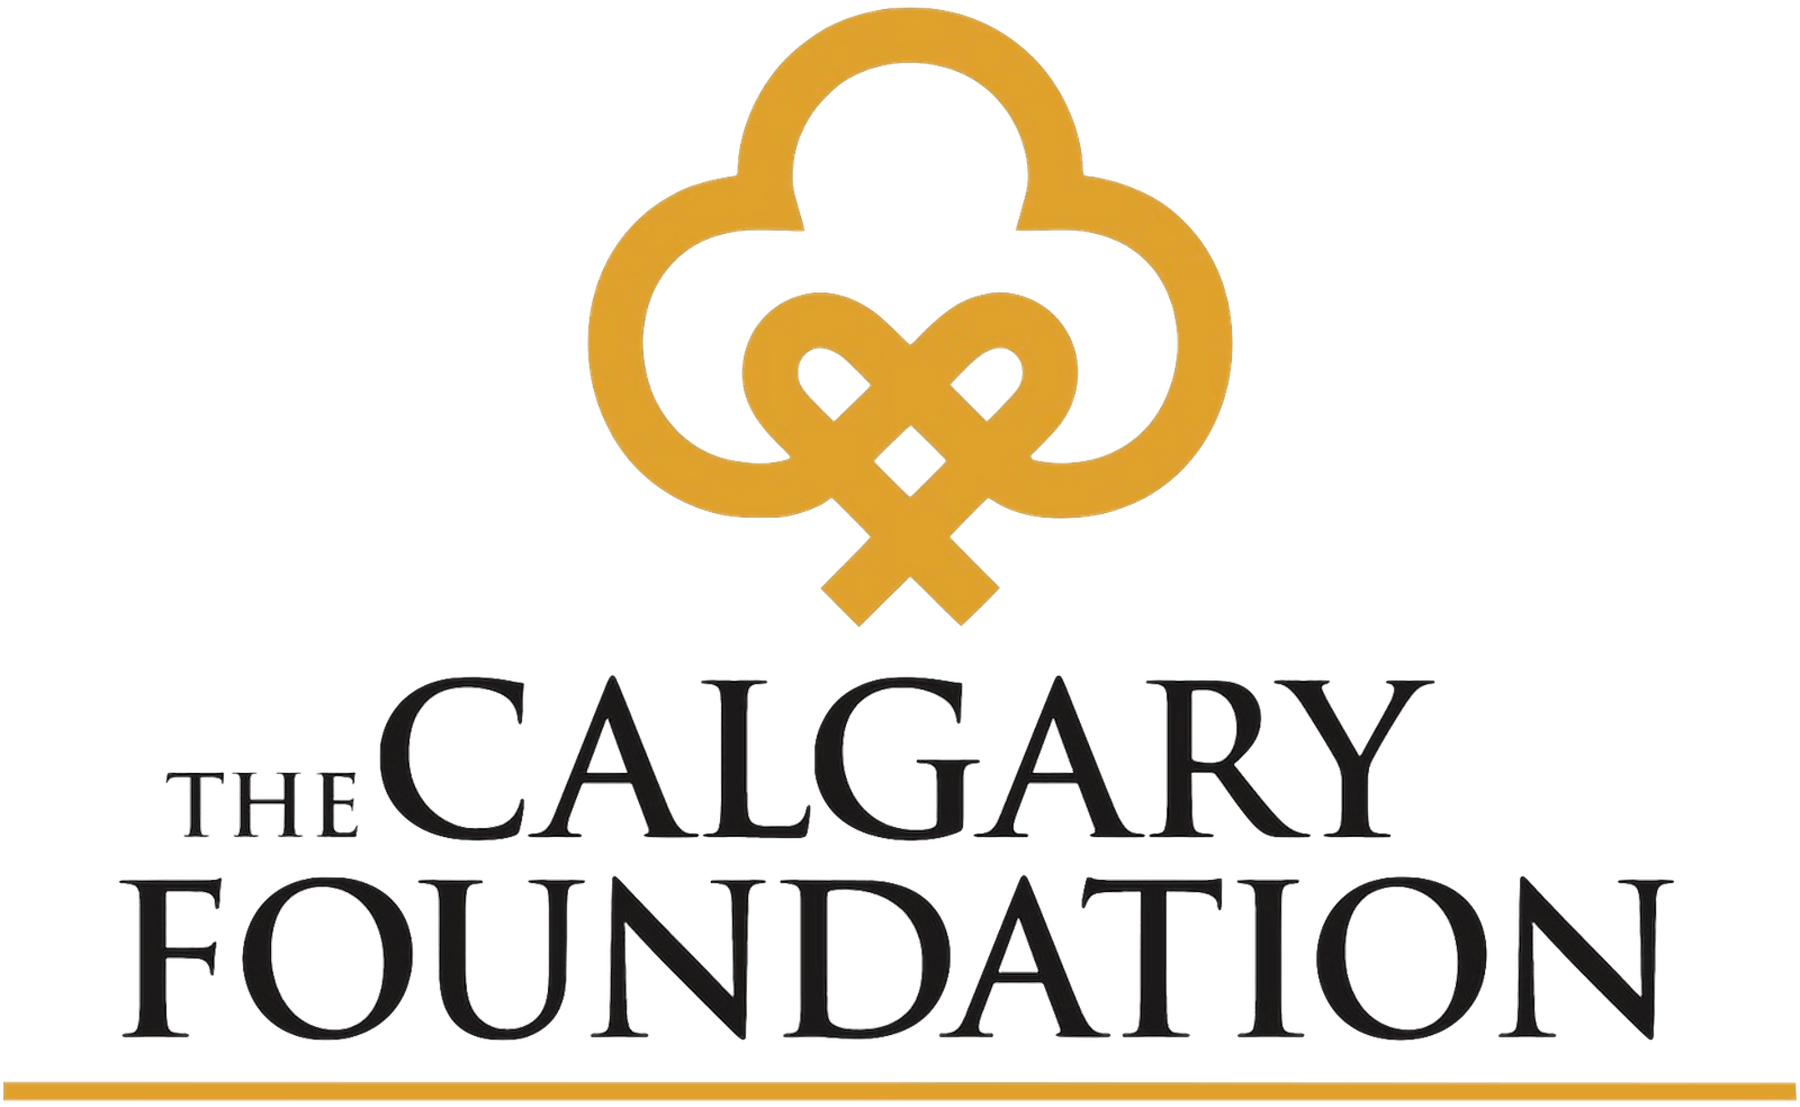 The Calgary Foundation logo on a transparent background.